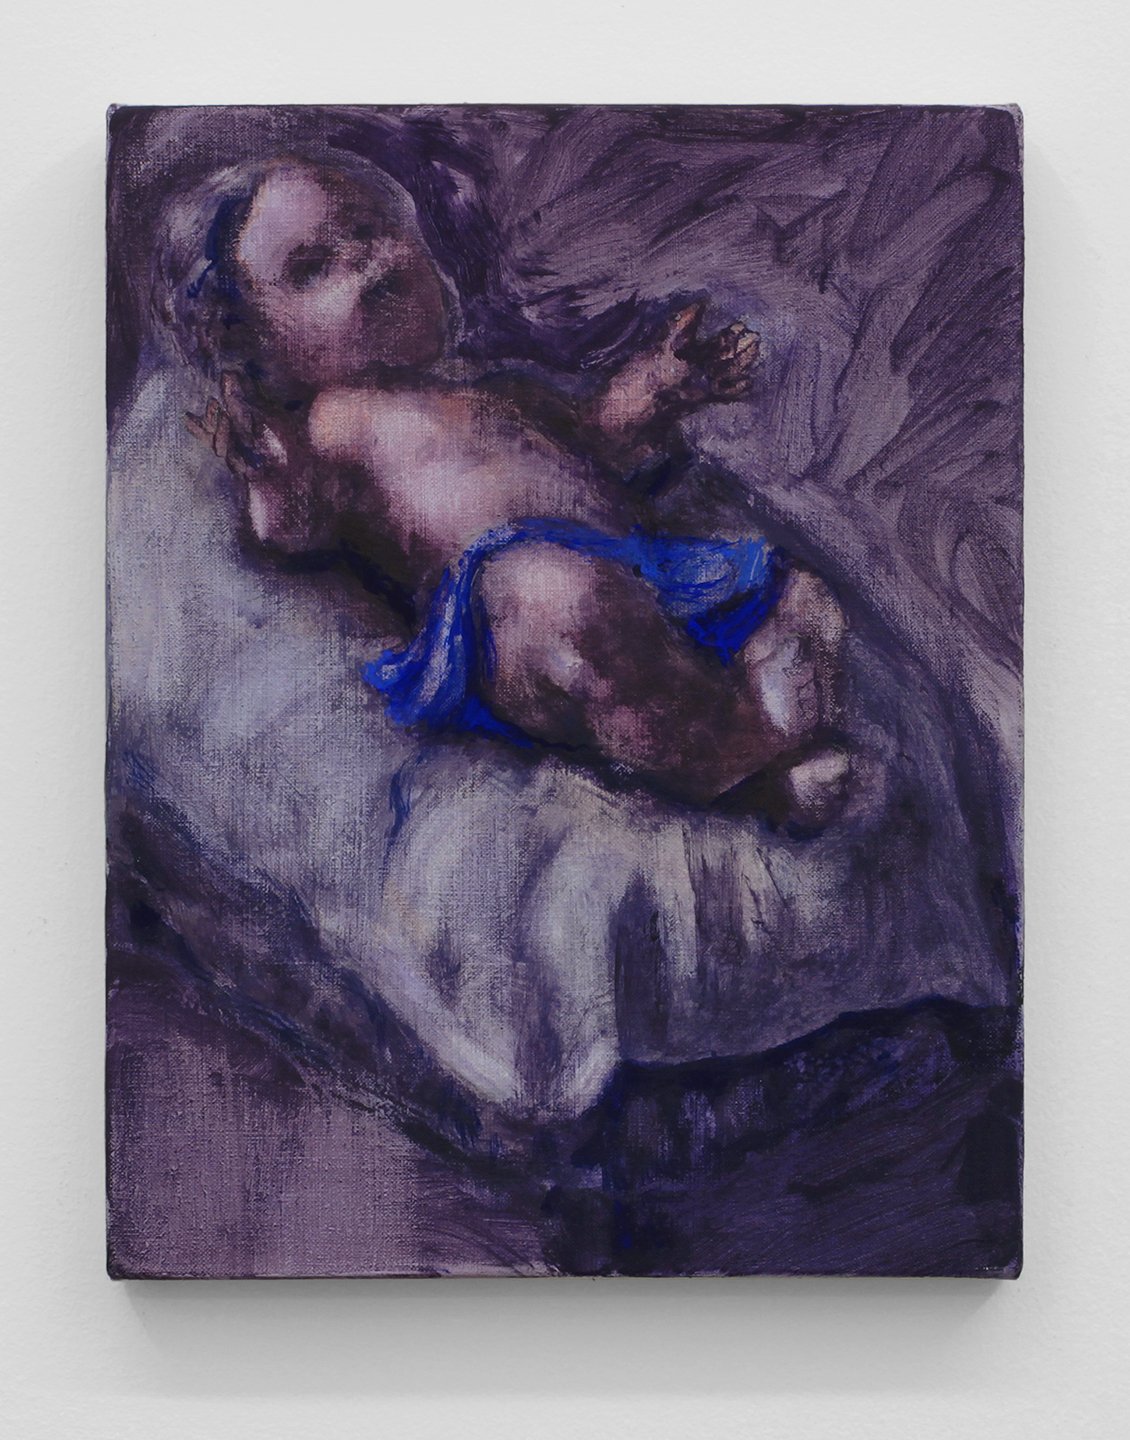  Ebay Jesus with Blue  2019  Distemper on canvas  10 x 8 inches  (25.4 x 20.32 cm) 